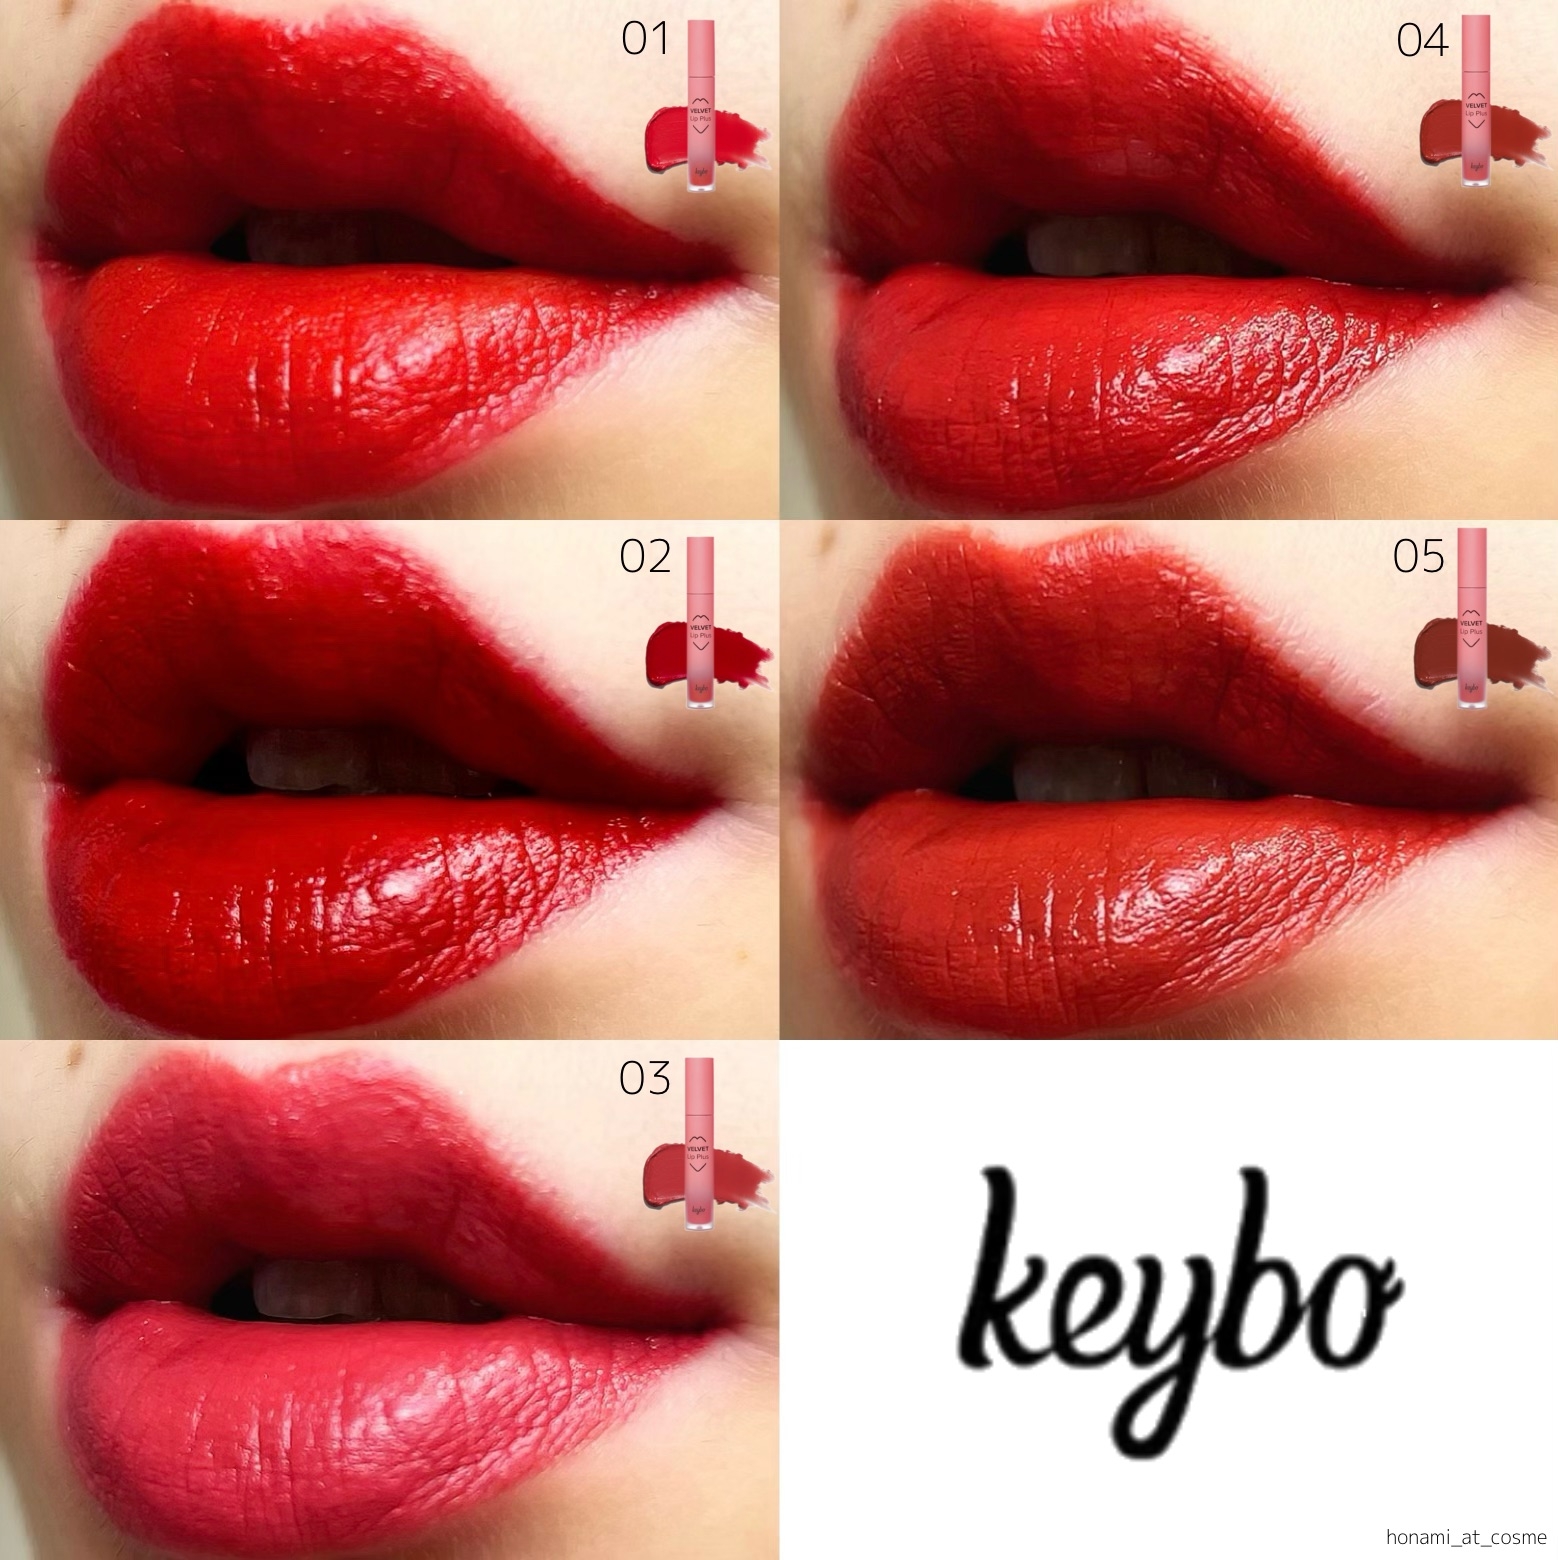 keybo(キボ) ベルベットプラスの良い点・メリットに関するほなみ☺︎さんの口コミ画像3